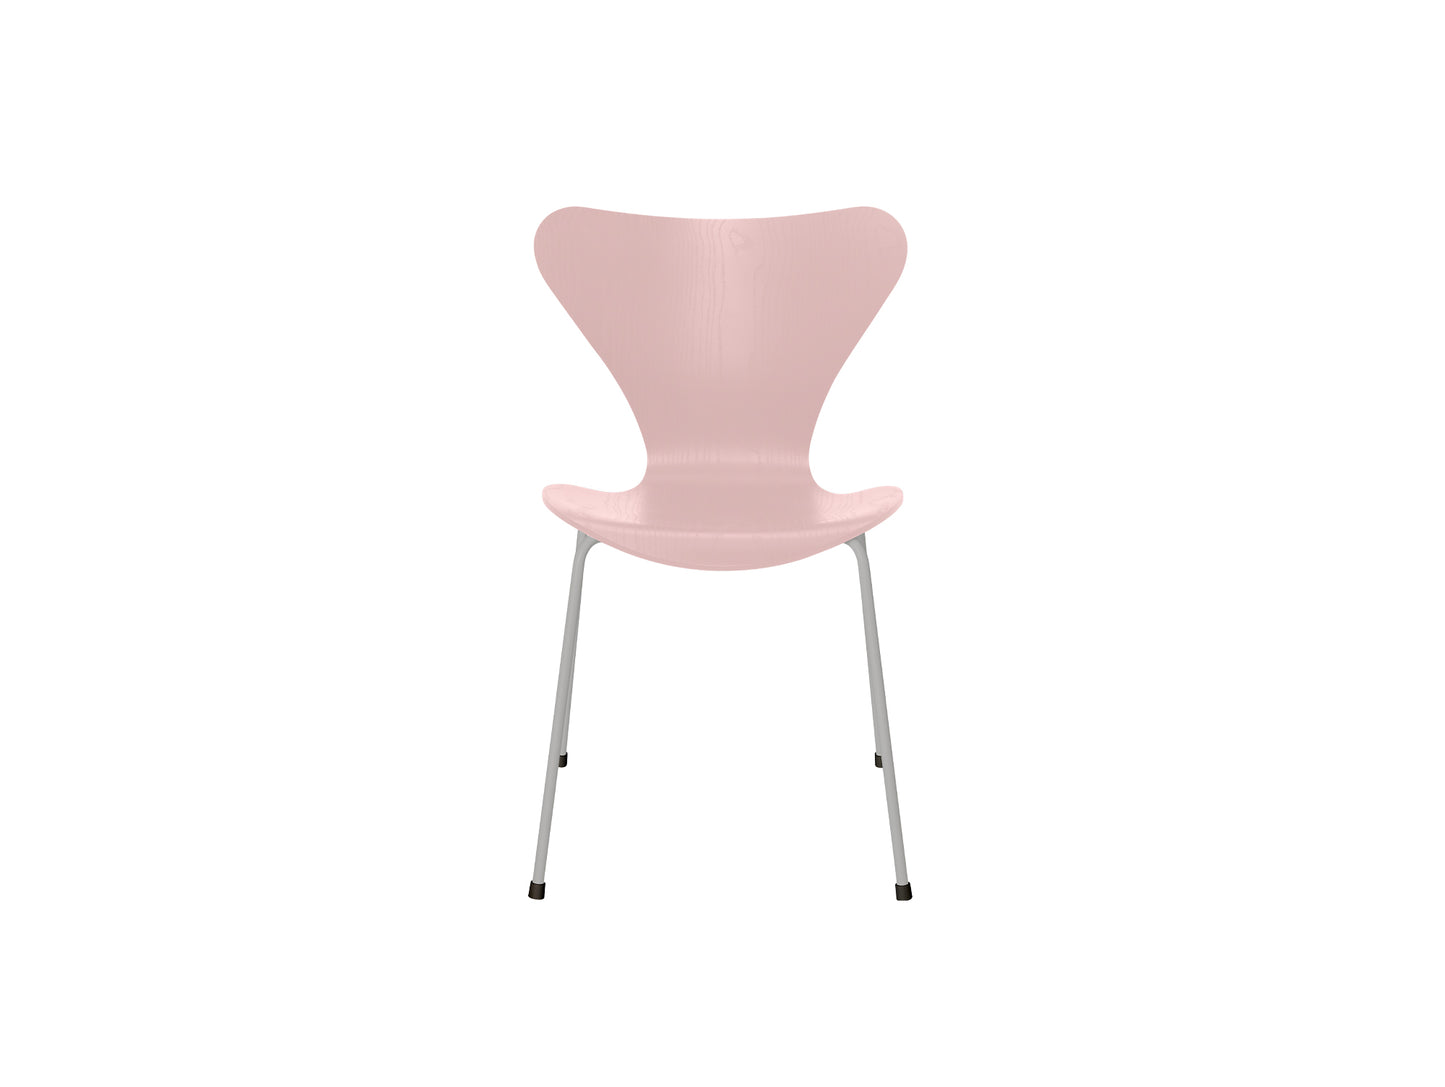 Series 7™ 3107 Dining Chair by Fritz Hansen - Pale Rose Coloured Ash Veneer Shell / Nine Grey Steel